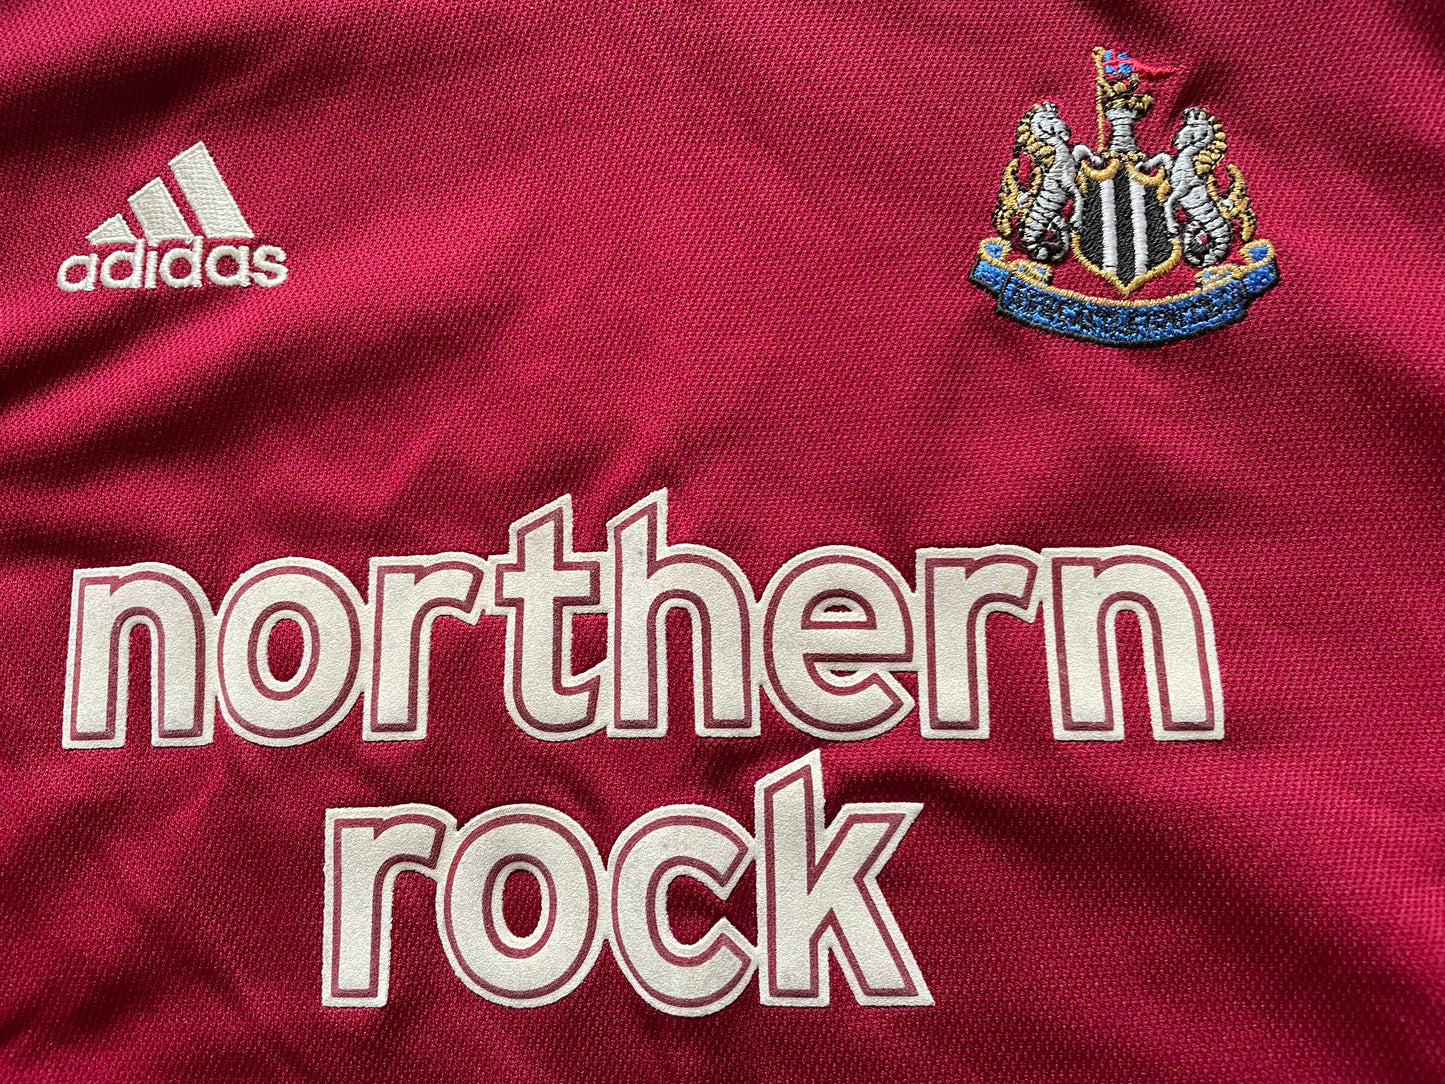 Newcastle 2004 Goalkeeper Shirt (excellent) Adults XS/Large Boys 152